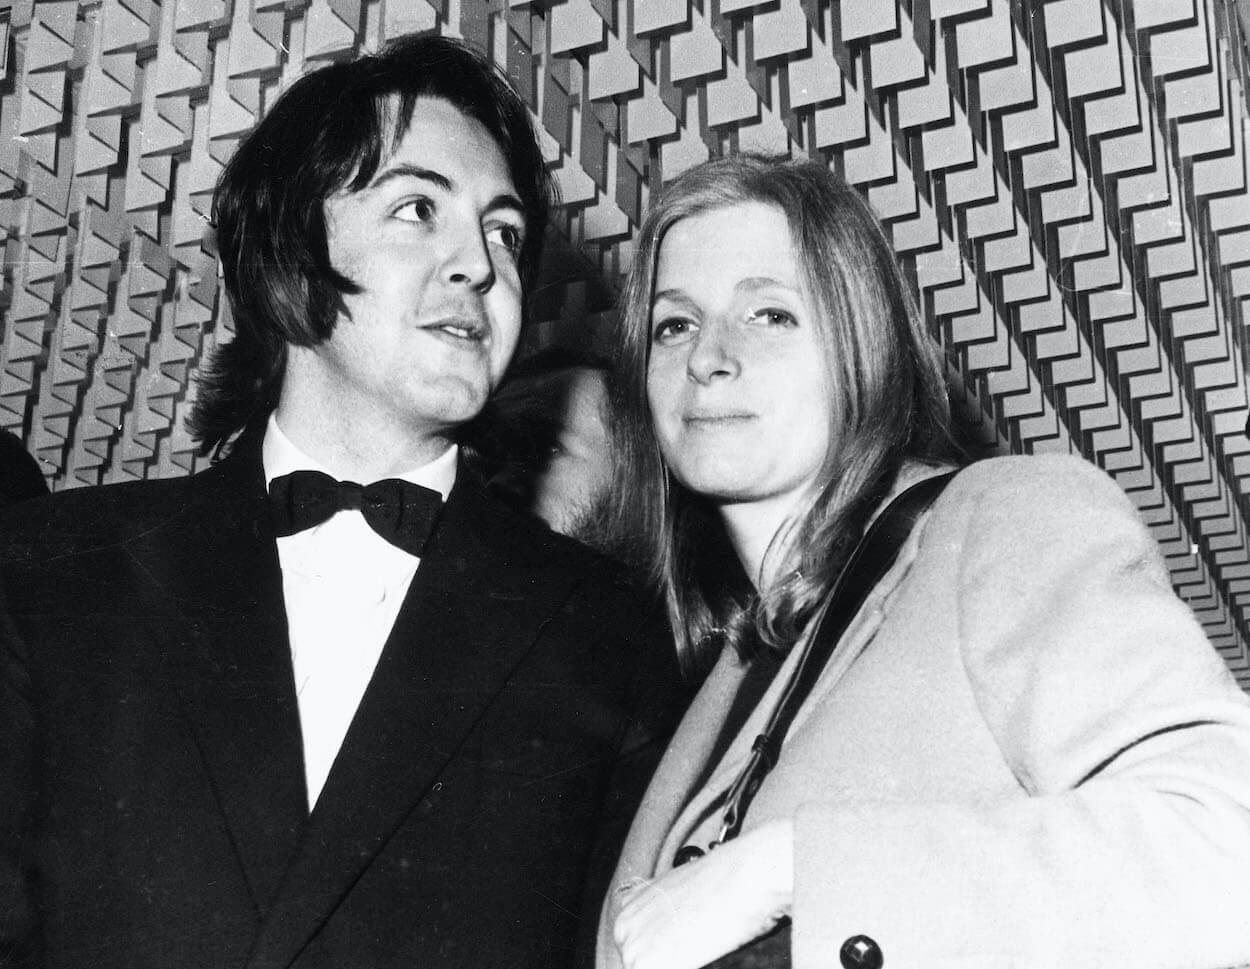 Paul McCartney in a tuxedo standing next to Linda McCartney in December 1969.